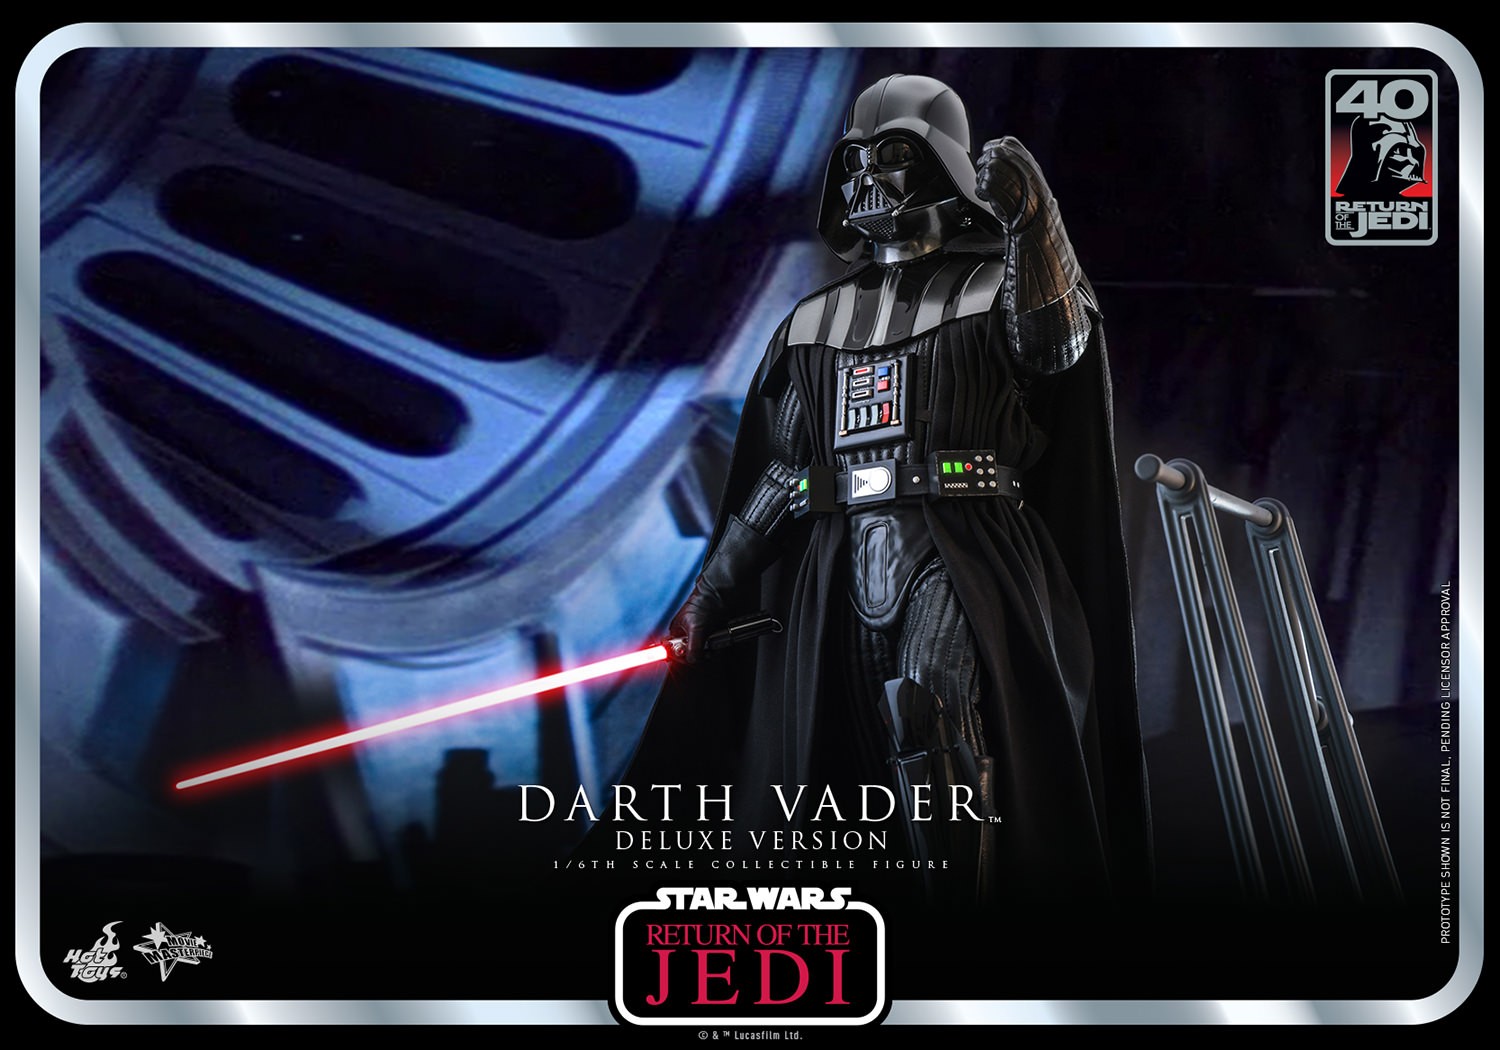 Darth Vader™ (Deluxe Version) (Return of the Jedi 40th Anniversary Collection)